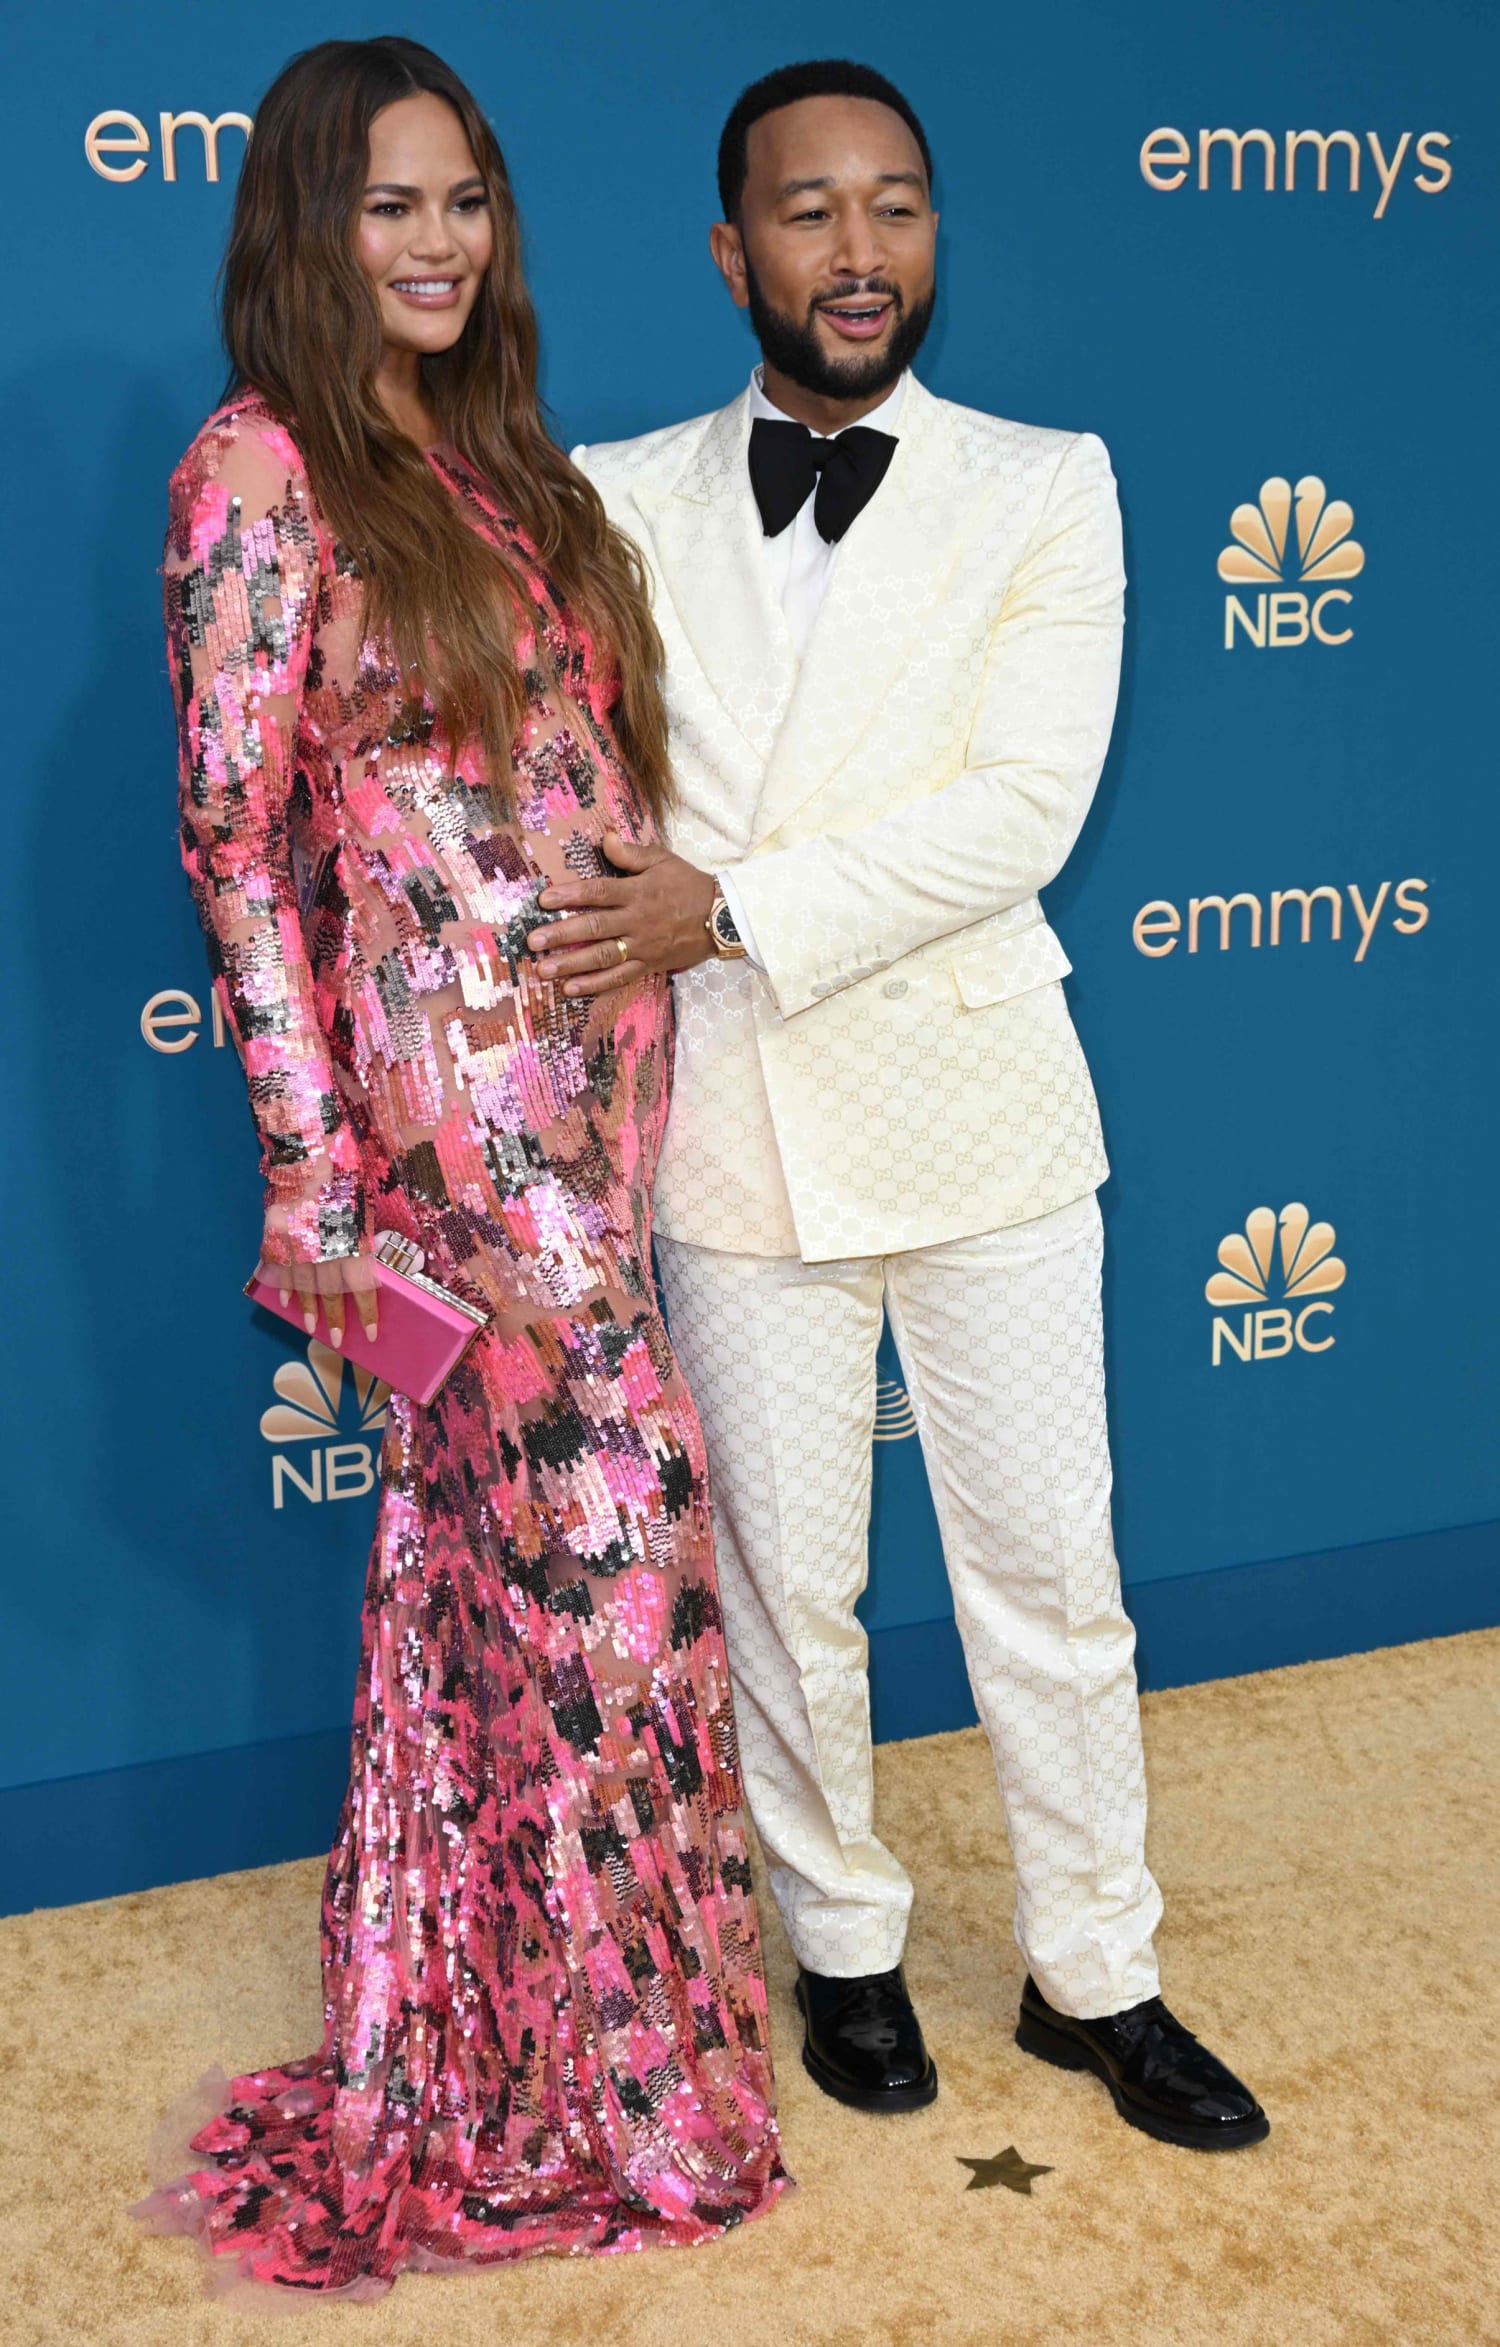 John Legend Cradles Chrissy Teigen's Baby Bump on Emmys Red Carpet